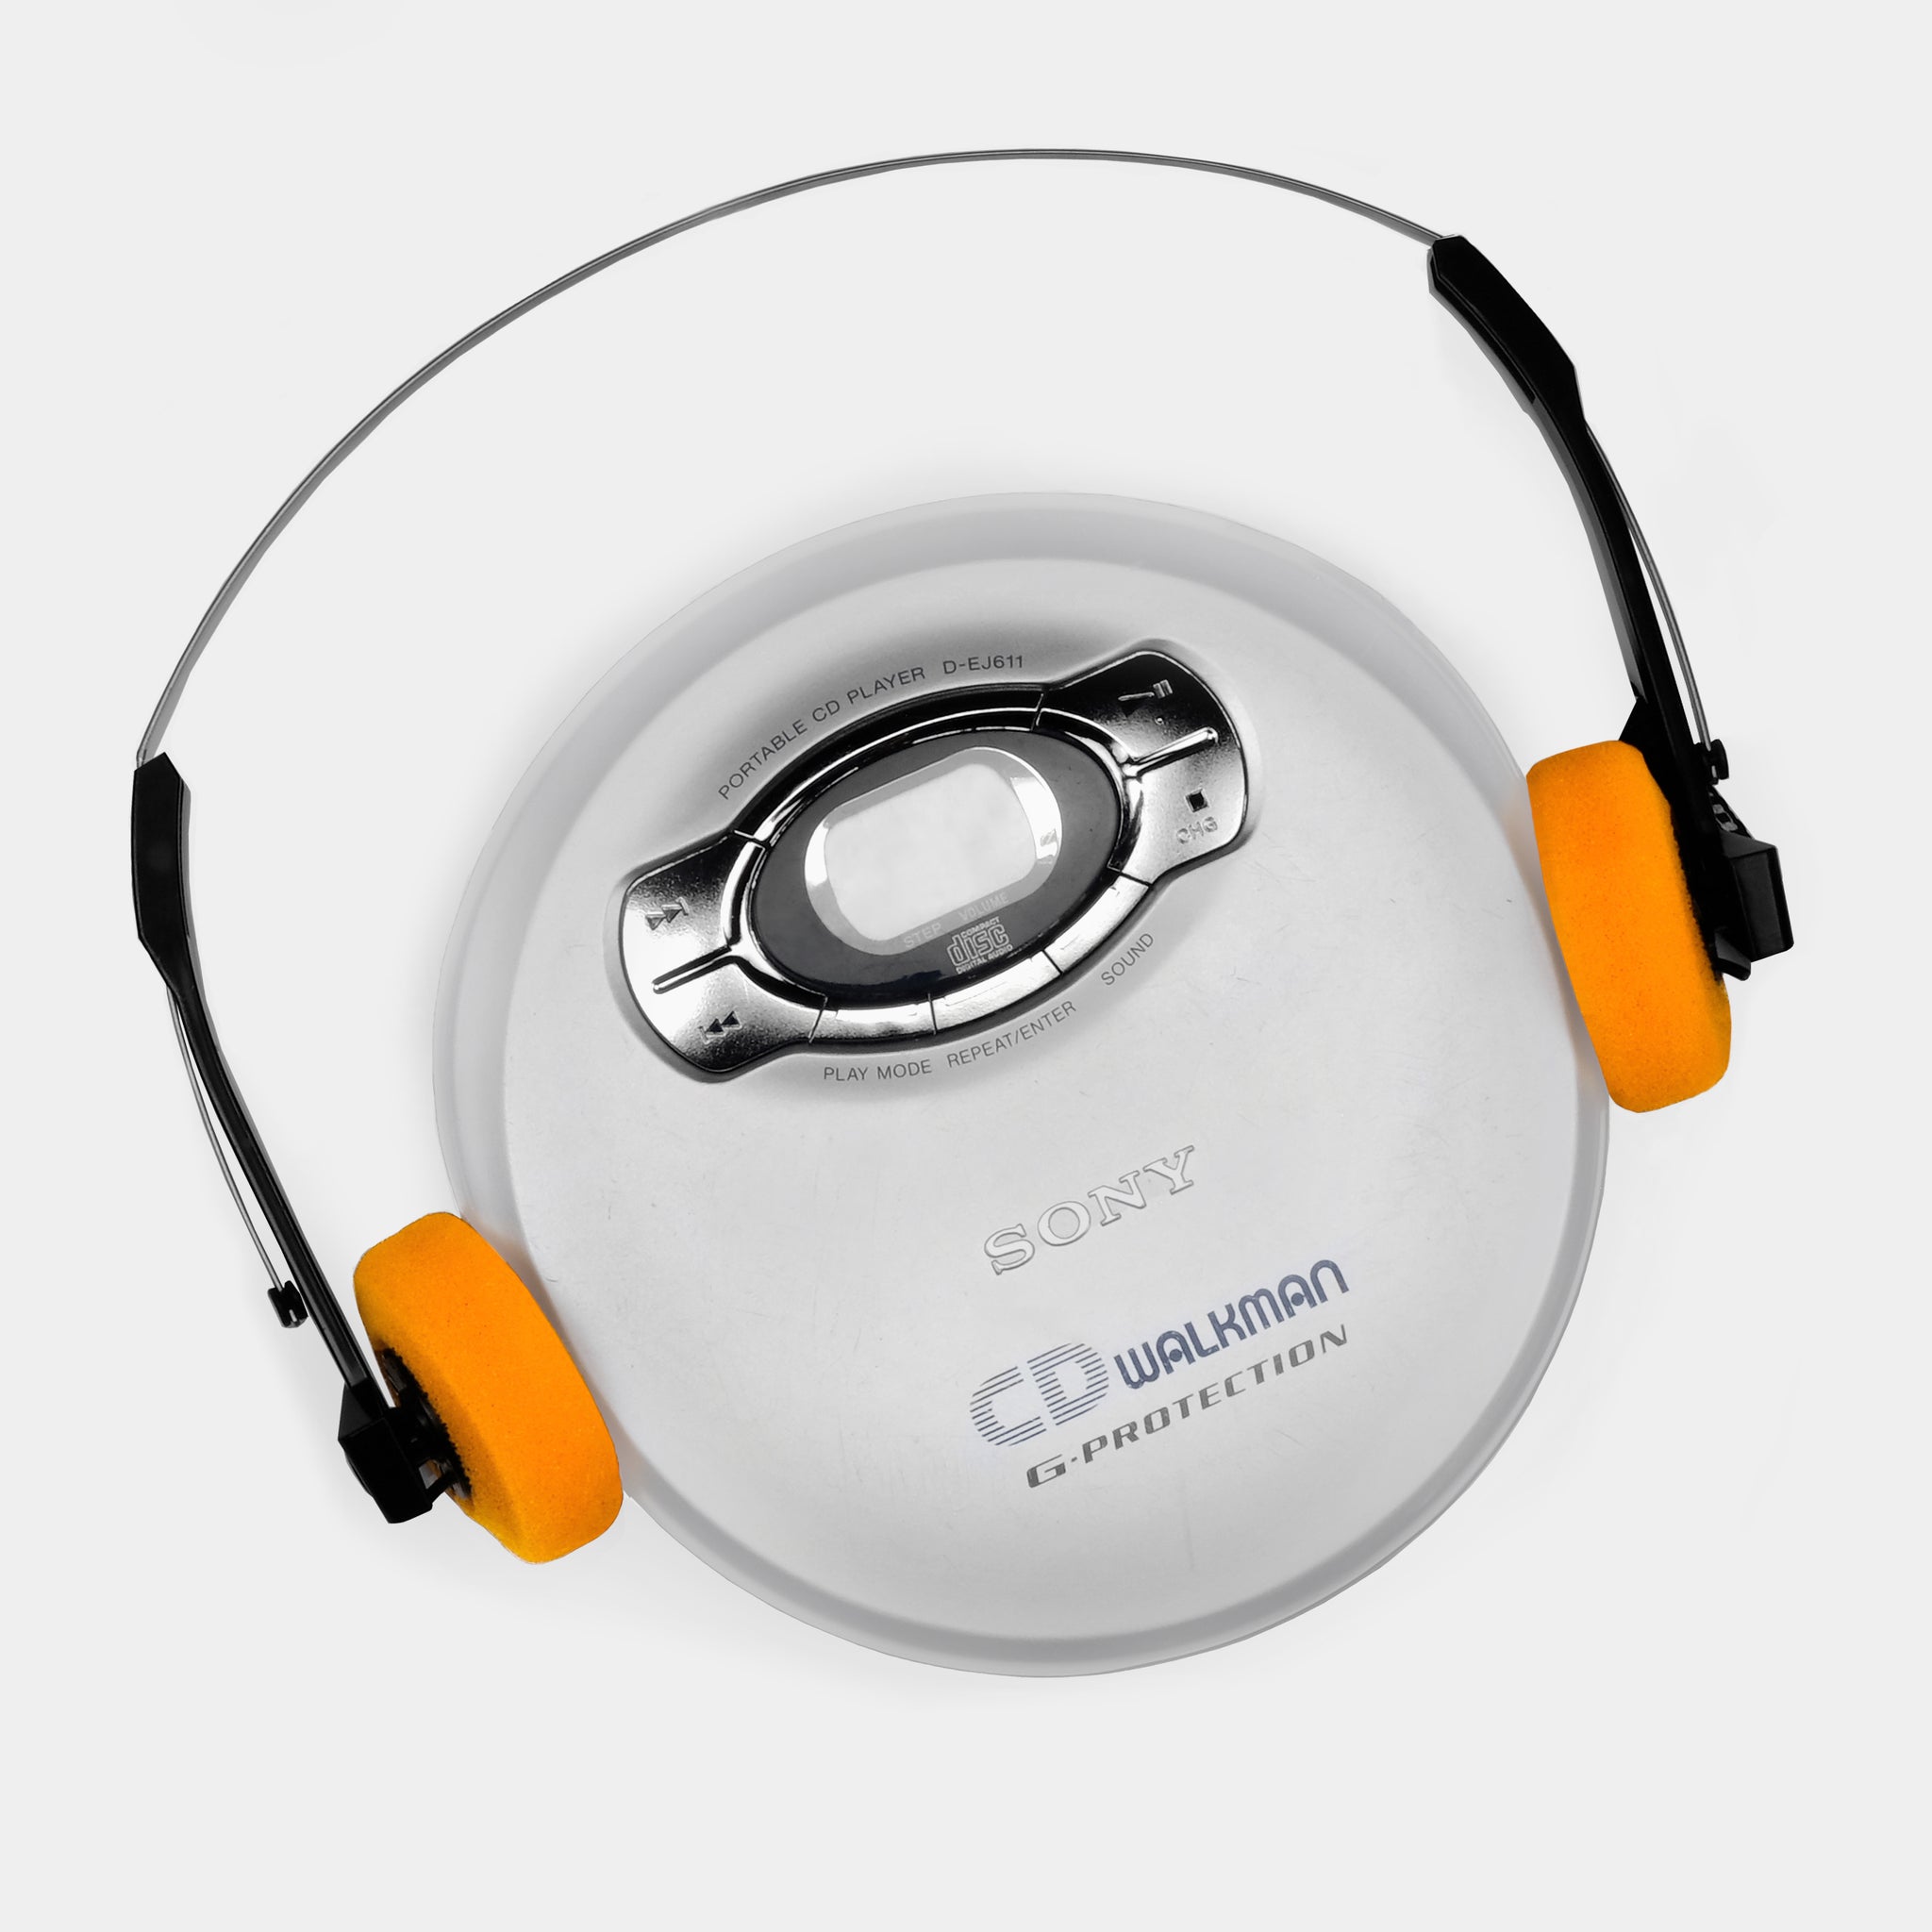 Sony CD Walkman - Portable Compac Disk Player - Silver (D-EJ611/S